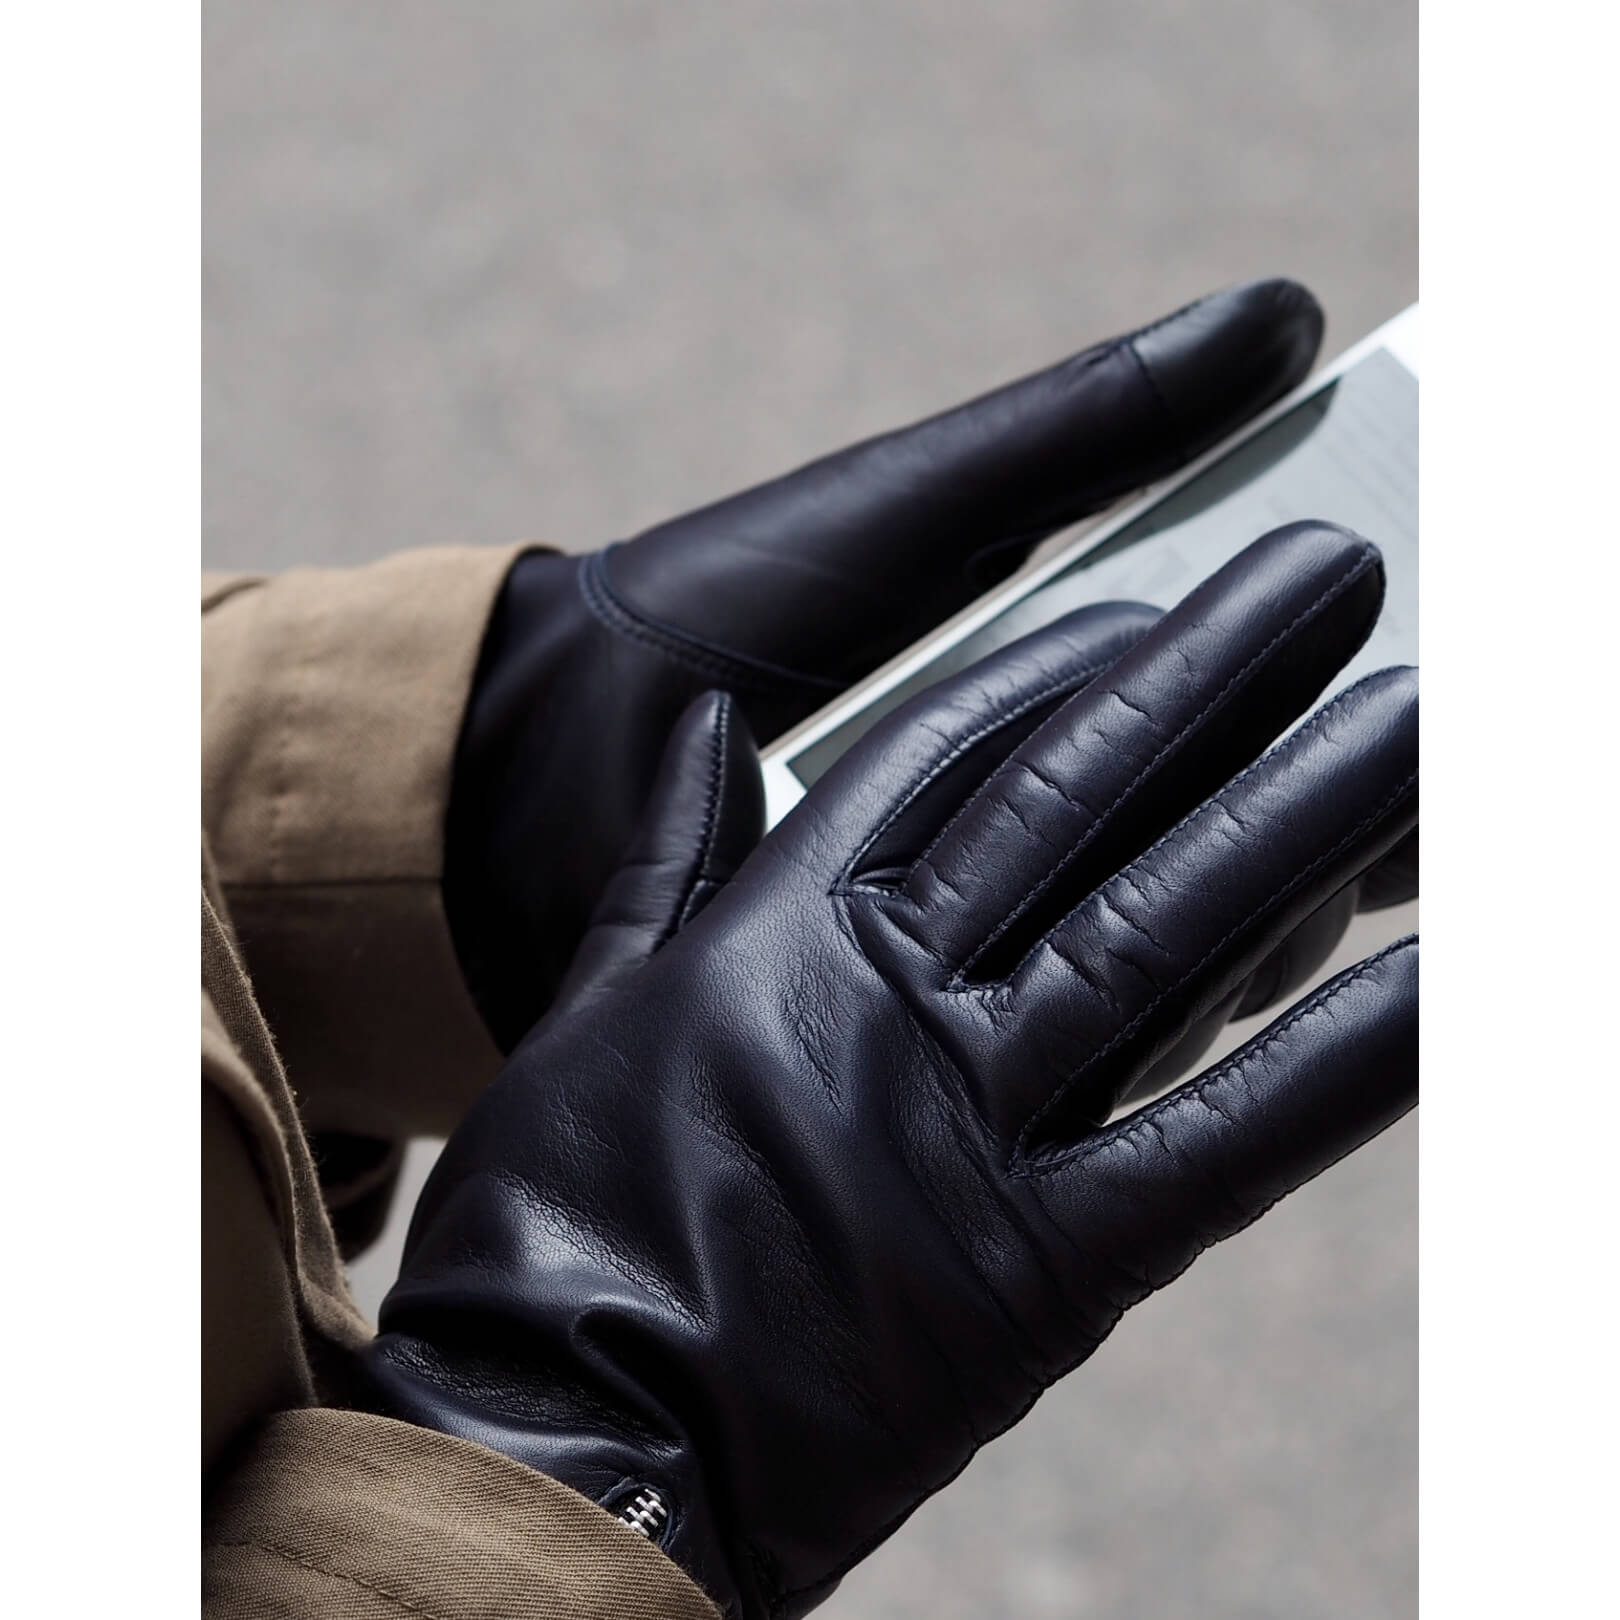 CRAZY HORSE II by GRANDOE Rugged Style 100% Deerskin Leather Gloves for Men Micropile Lining